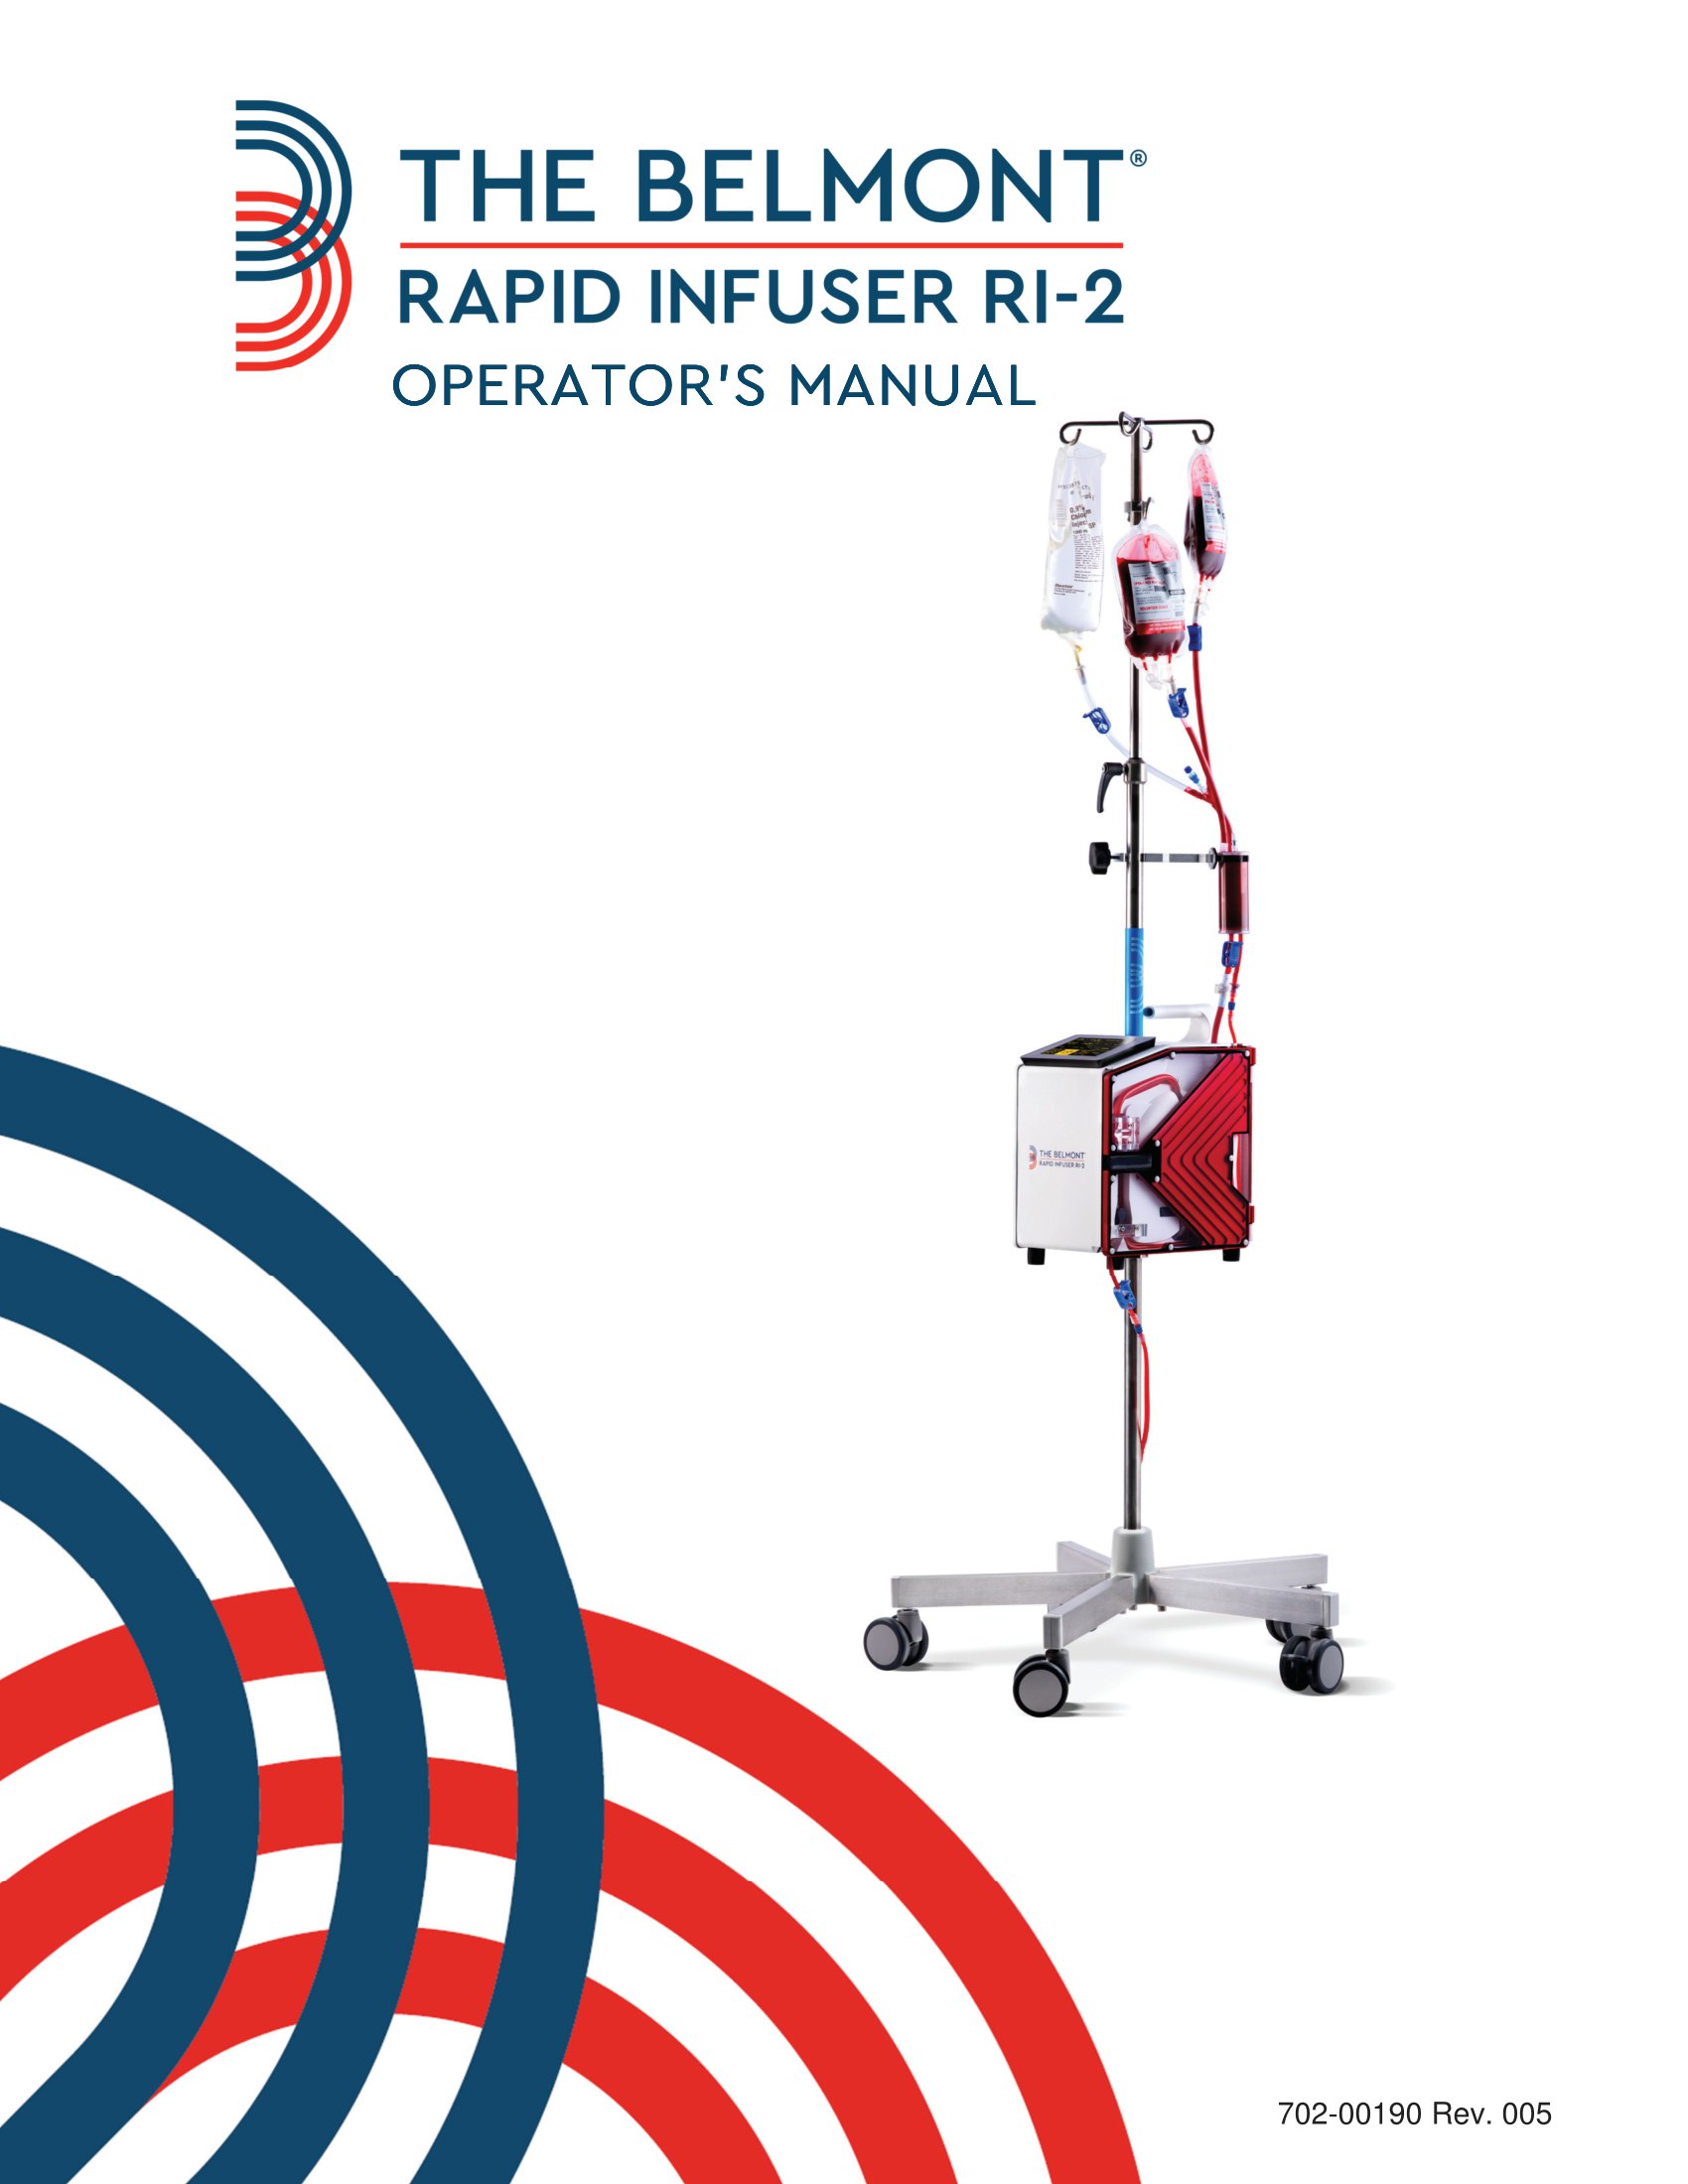 The Belmont® Rapid Infuser RI-2 Operators Manual, English